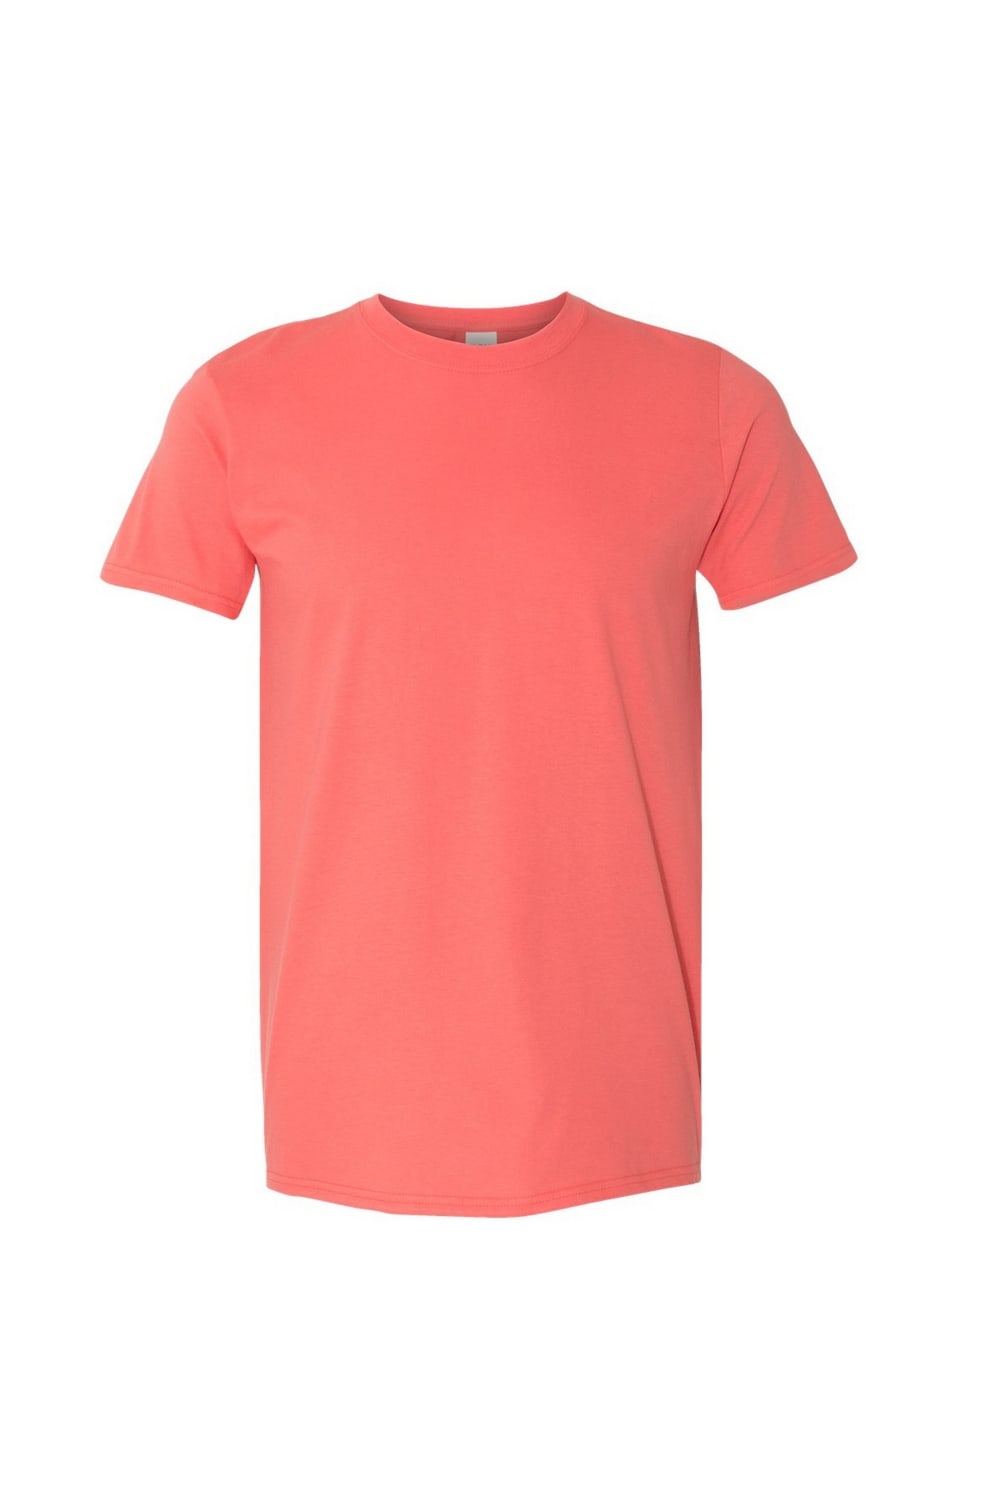 Gildan Mens Short Sleeve Soft-Style T-Shirt (Coral Silk)